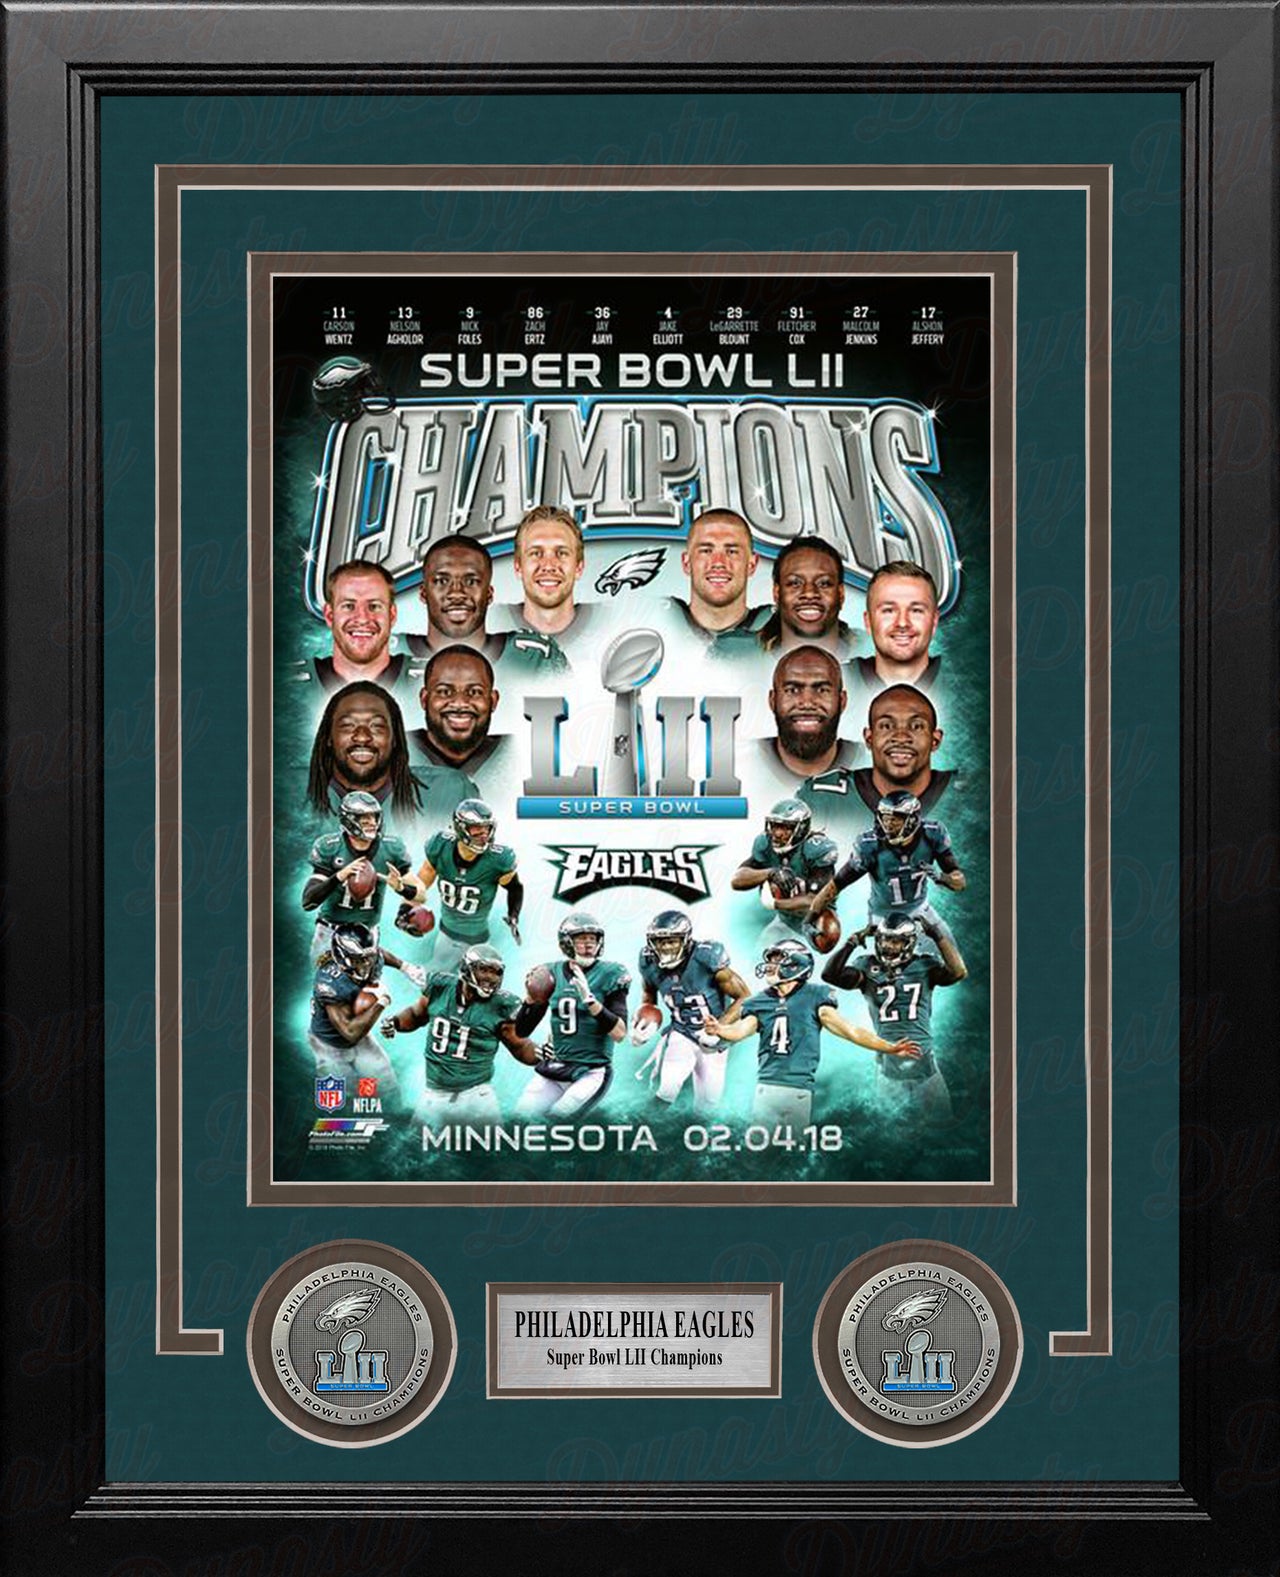 Philadelphia Eagles Super Bowl LII Champions 8" x 10" Framed Collage Football Photo